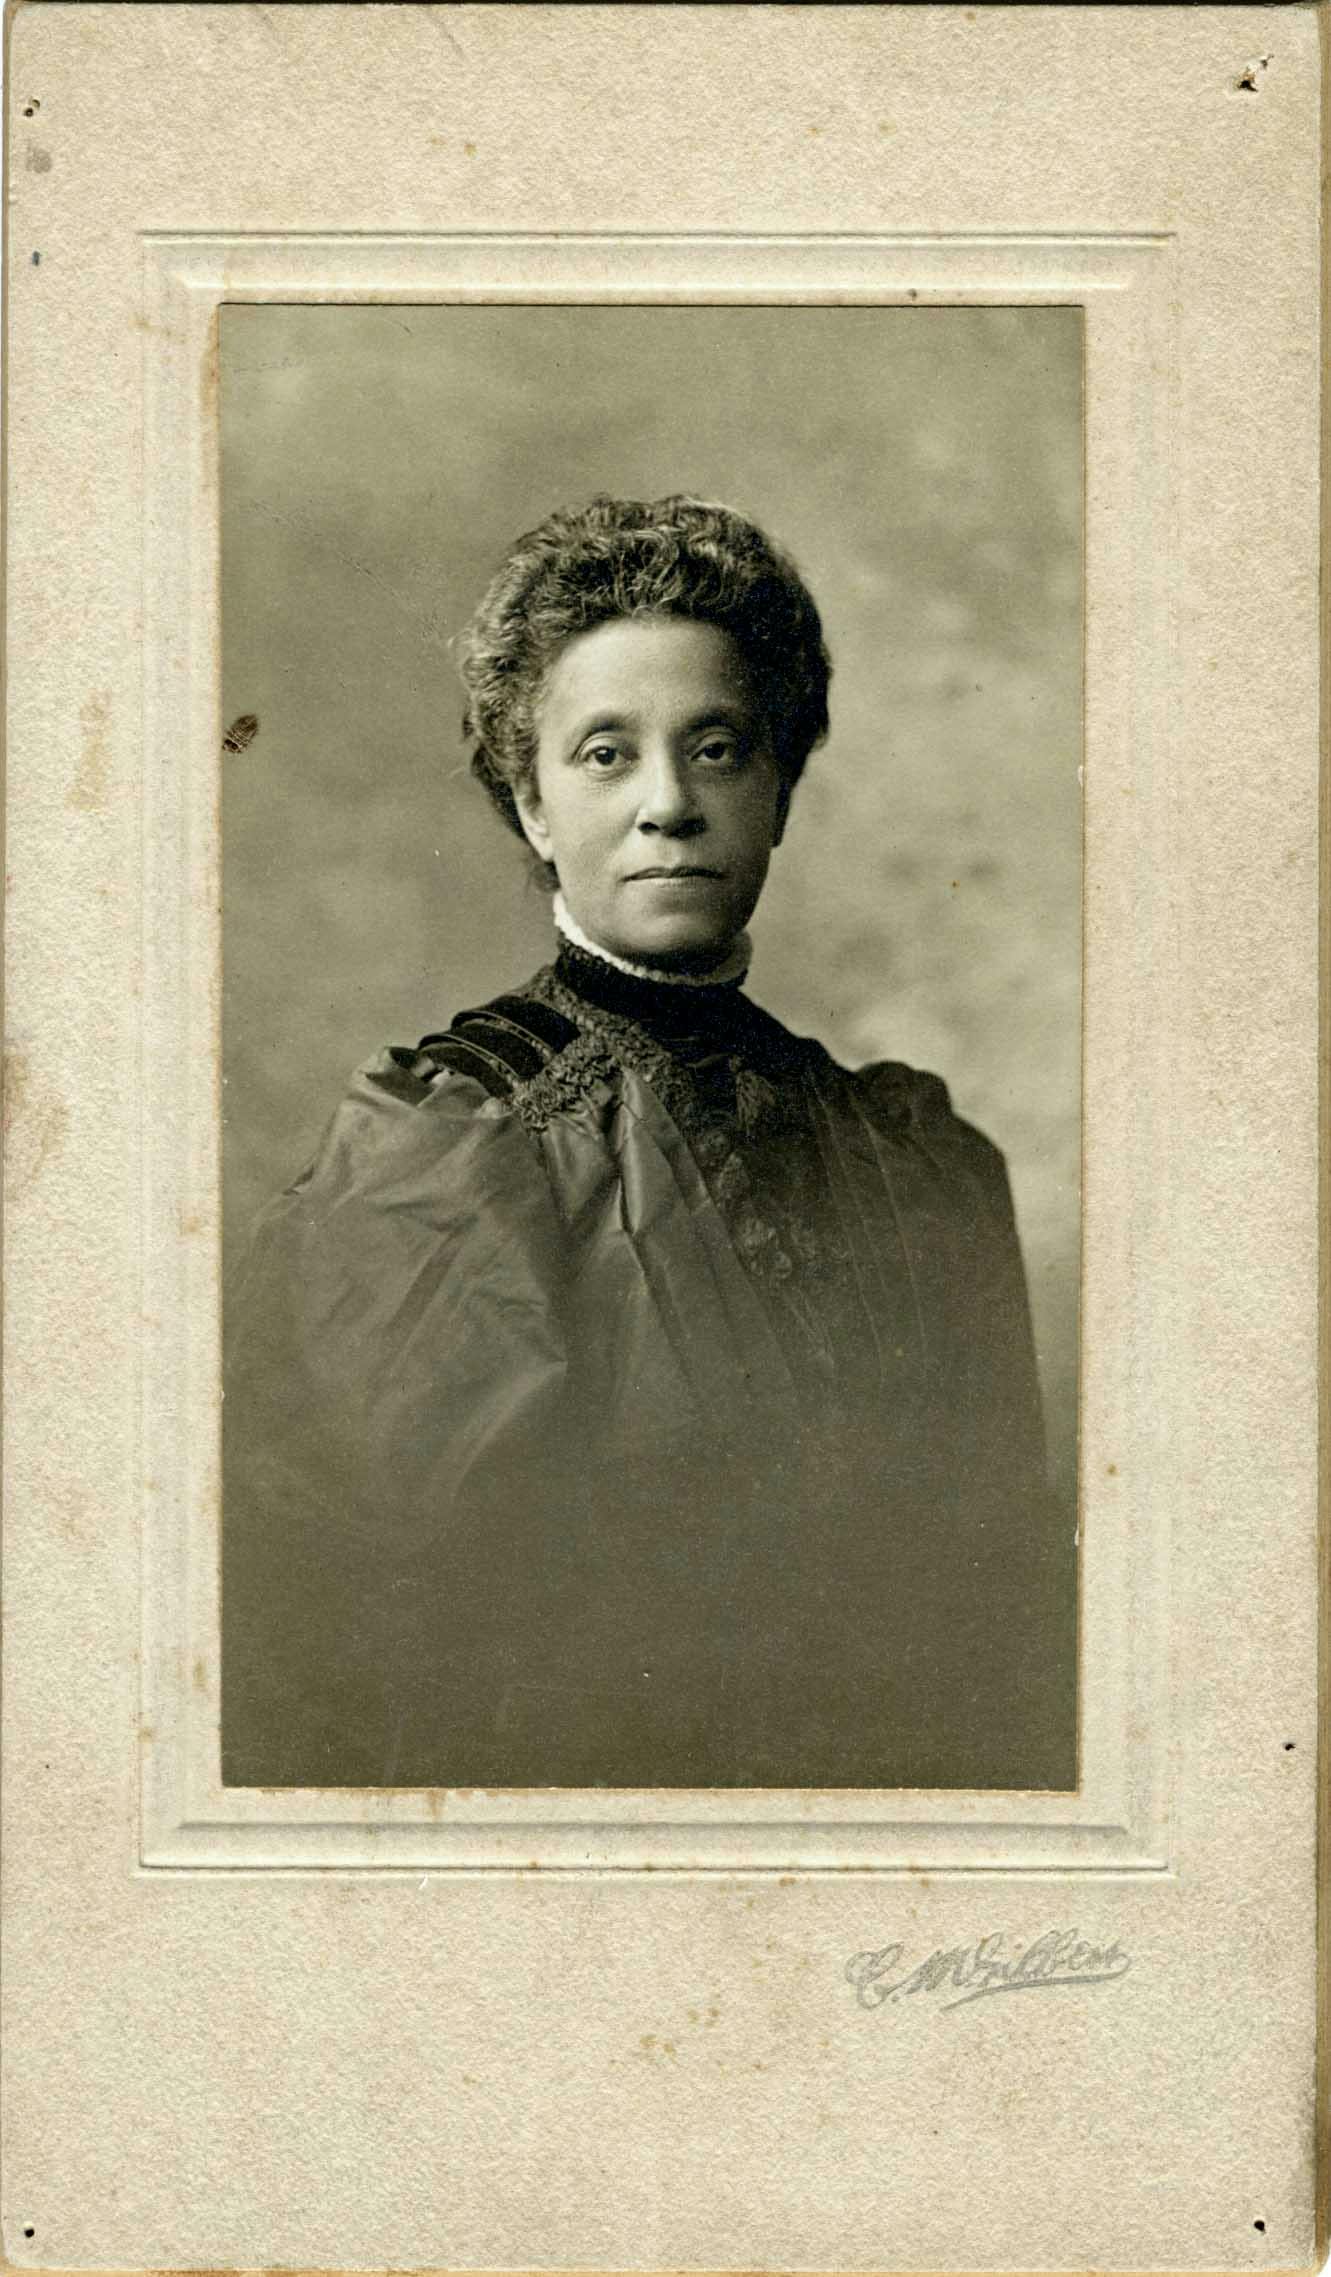 Photo of Gertrude Bustill Mossell.